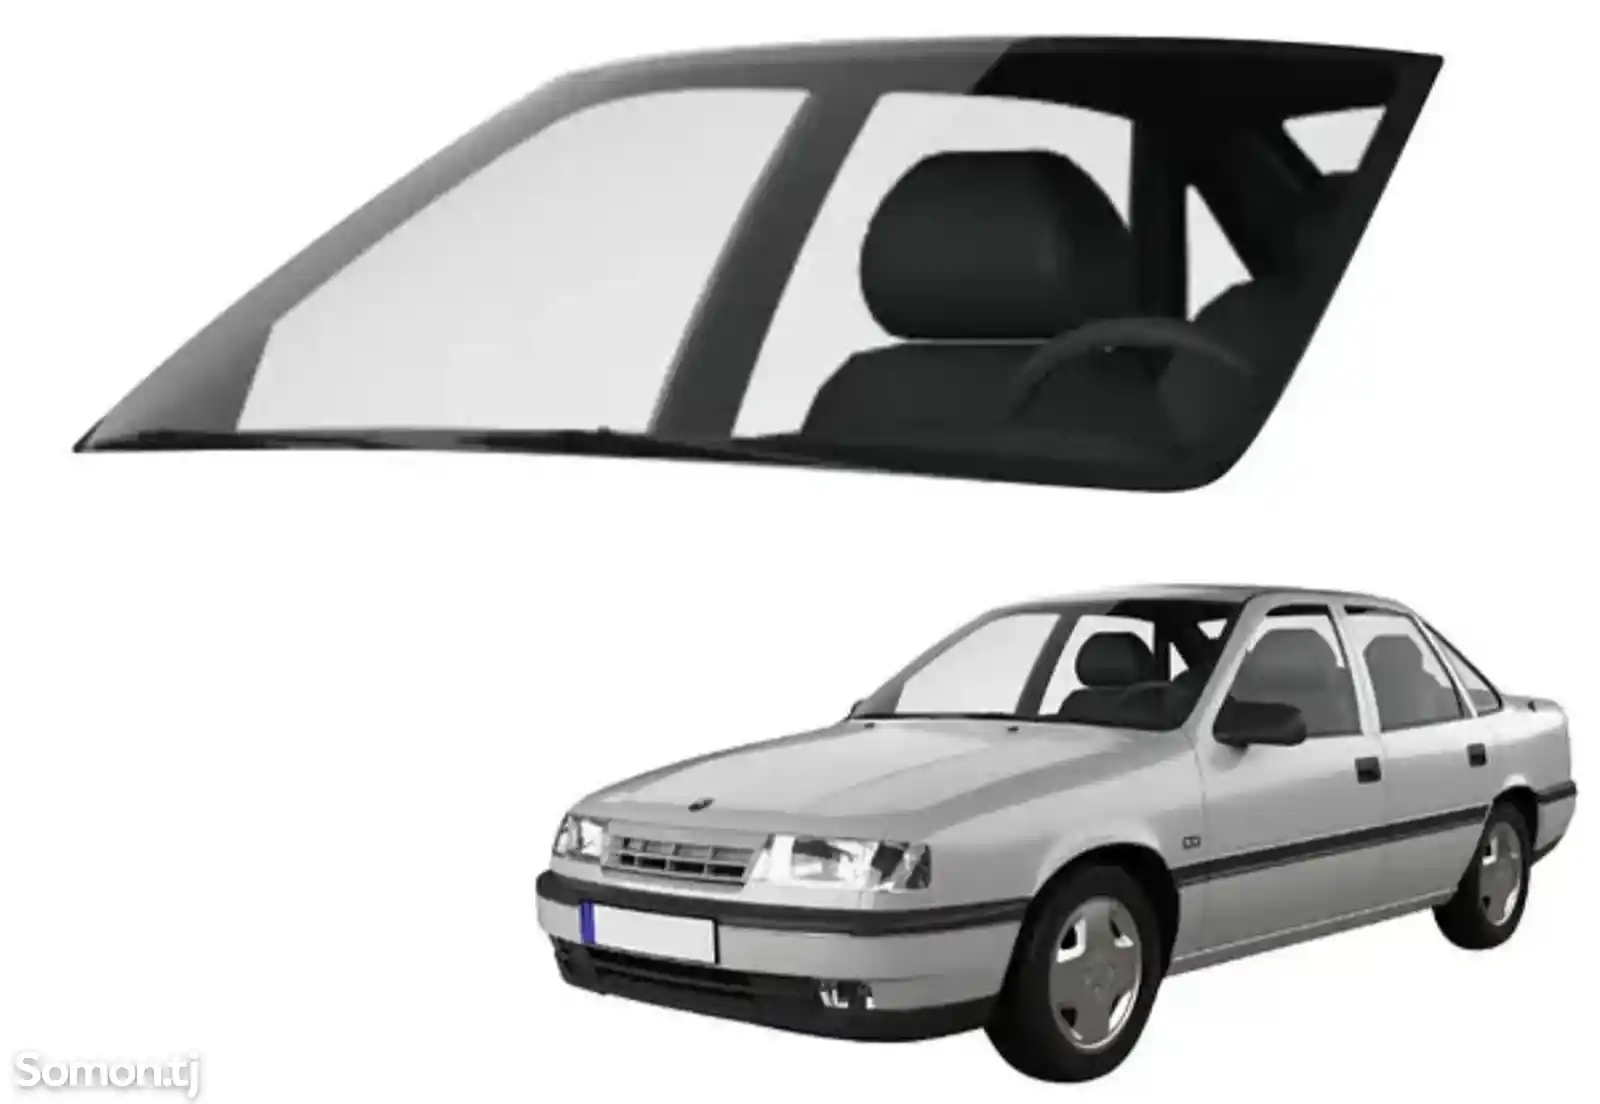 Лобовое стекло на Opel Vectra A 1988